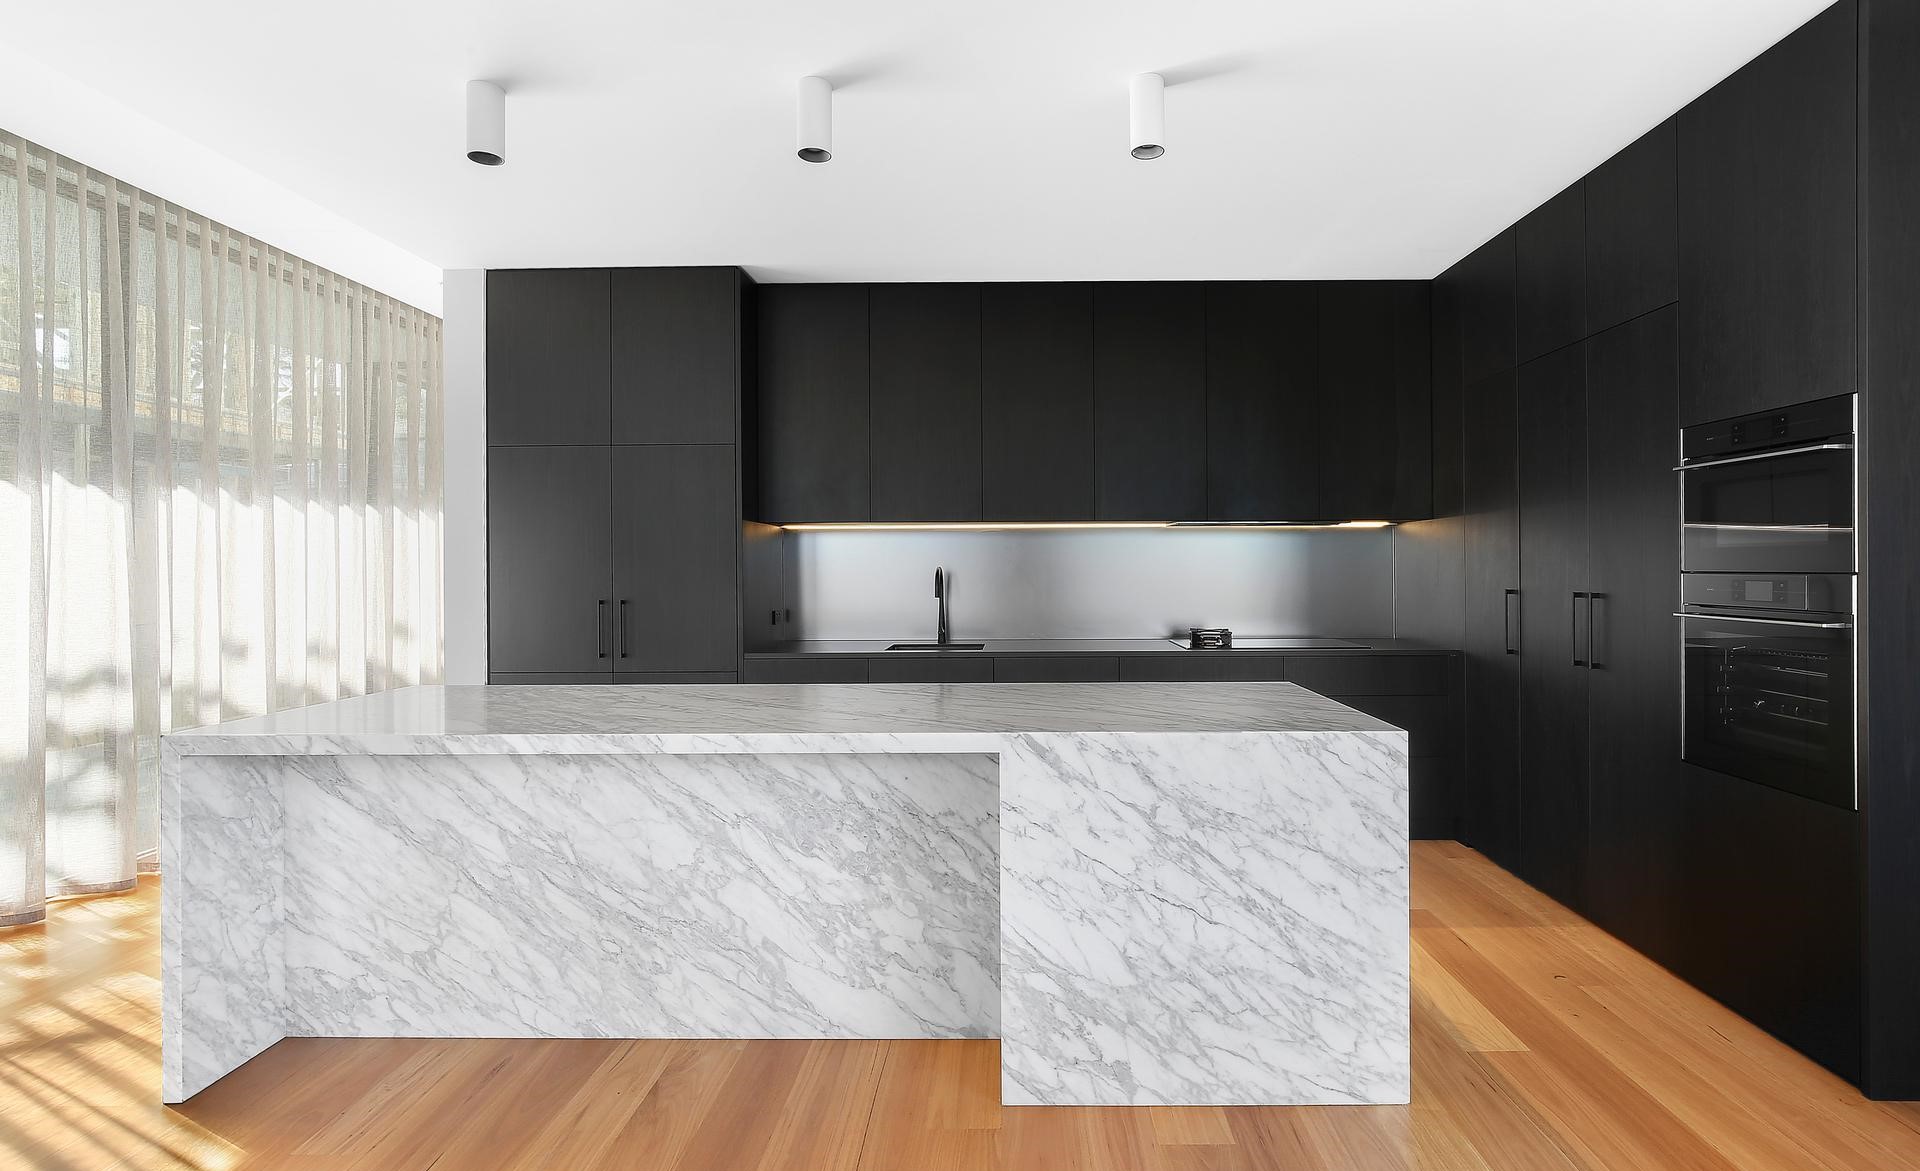 Veneer Polyurethane kitchen featuring a Carrara Marble Island bench with waterfall return - Putney, Sydney